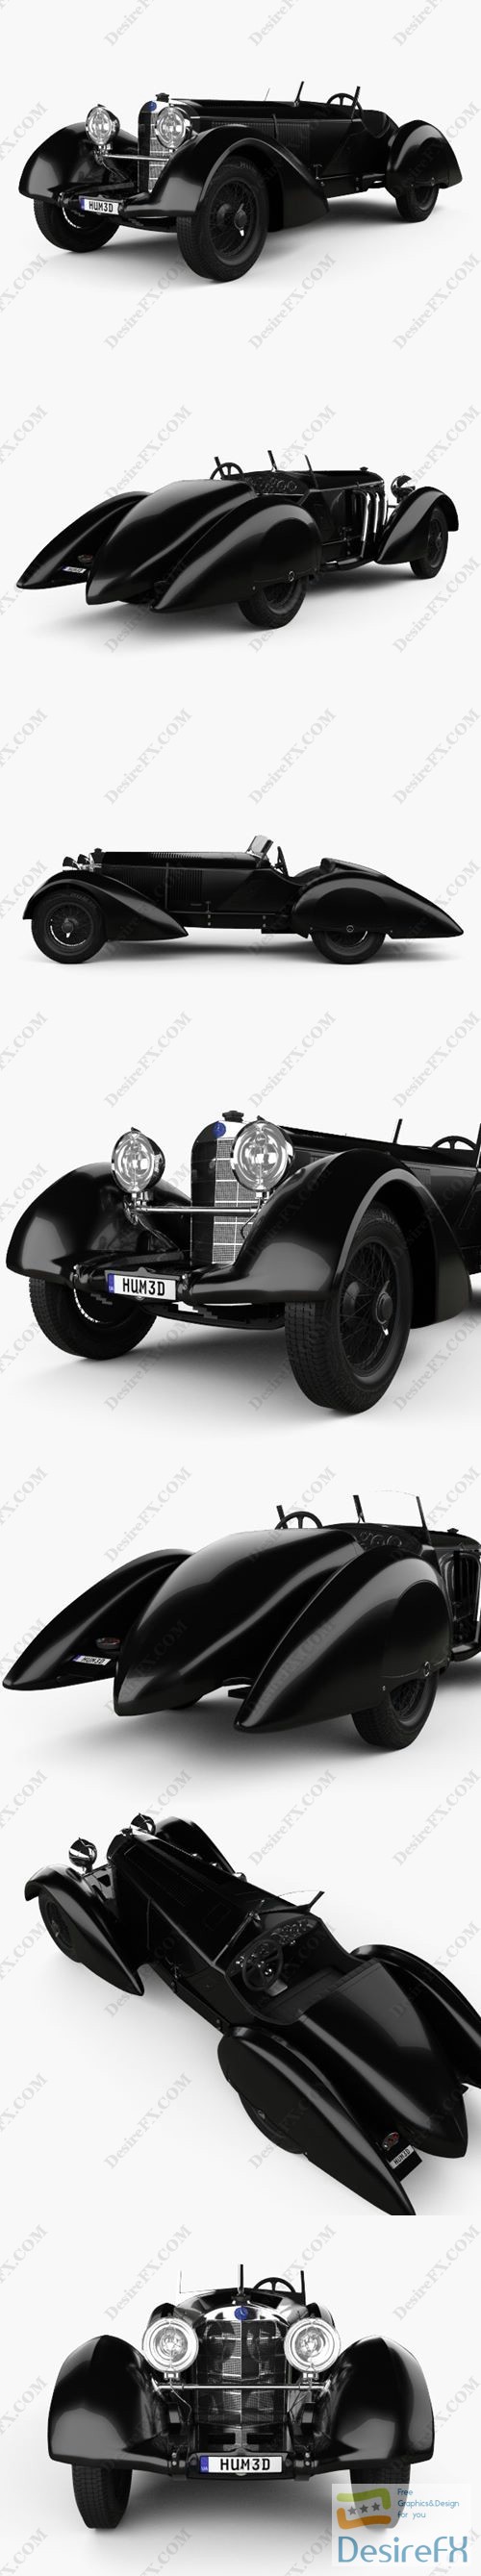 Mercedes-Benz 710 SSK Trossi Roadster 1930 3D Model